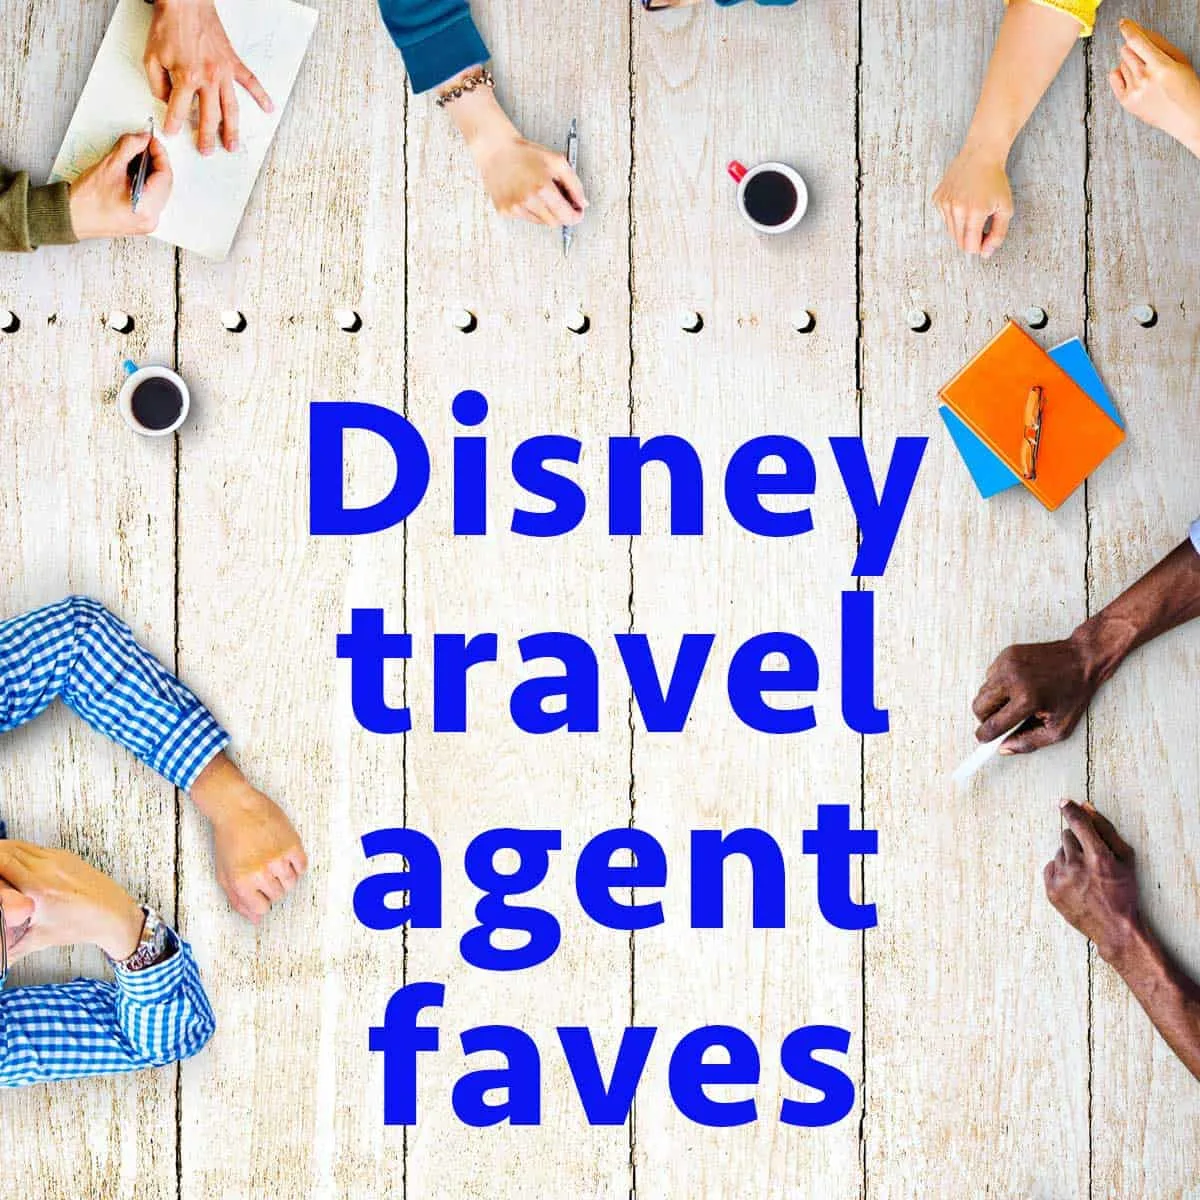 Disney Travel Agent faves | WDW Prep School